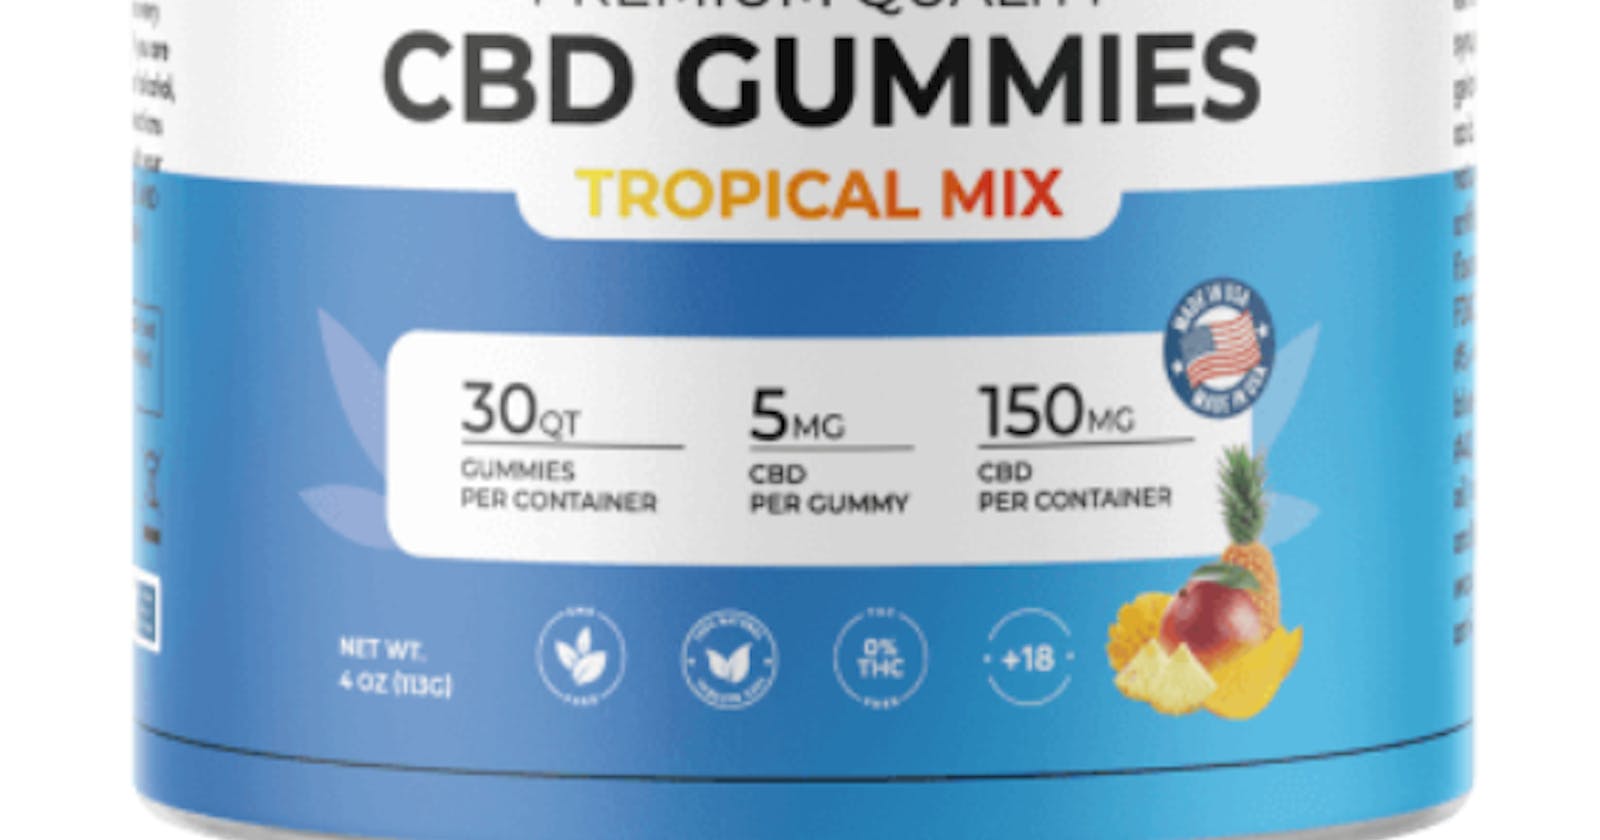 Reveal CBD Gummies Reviews?